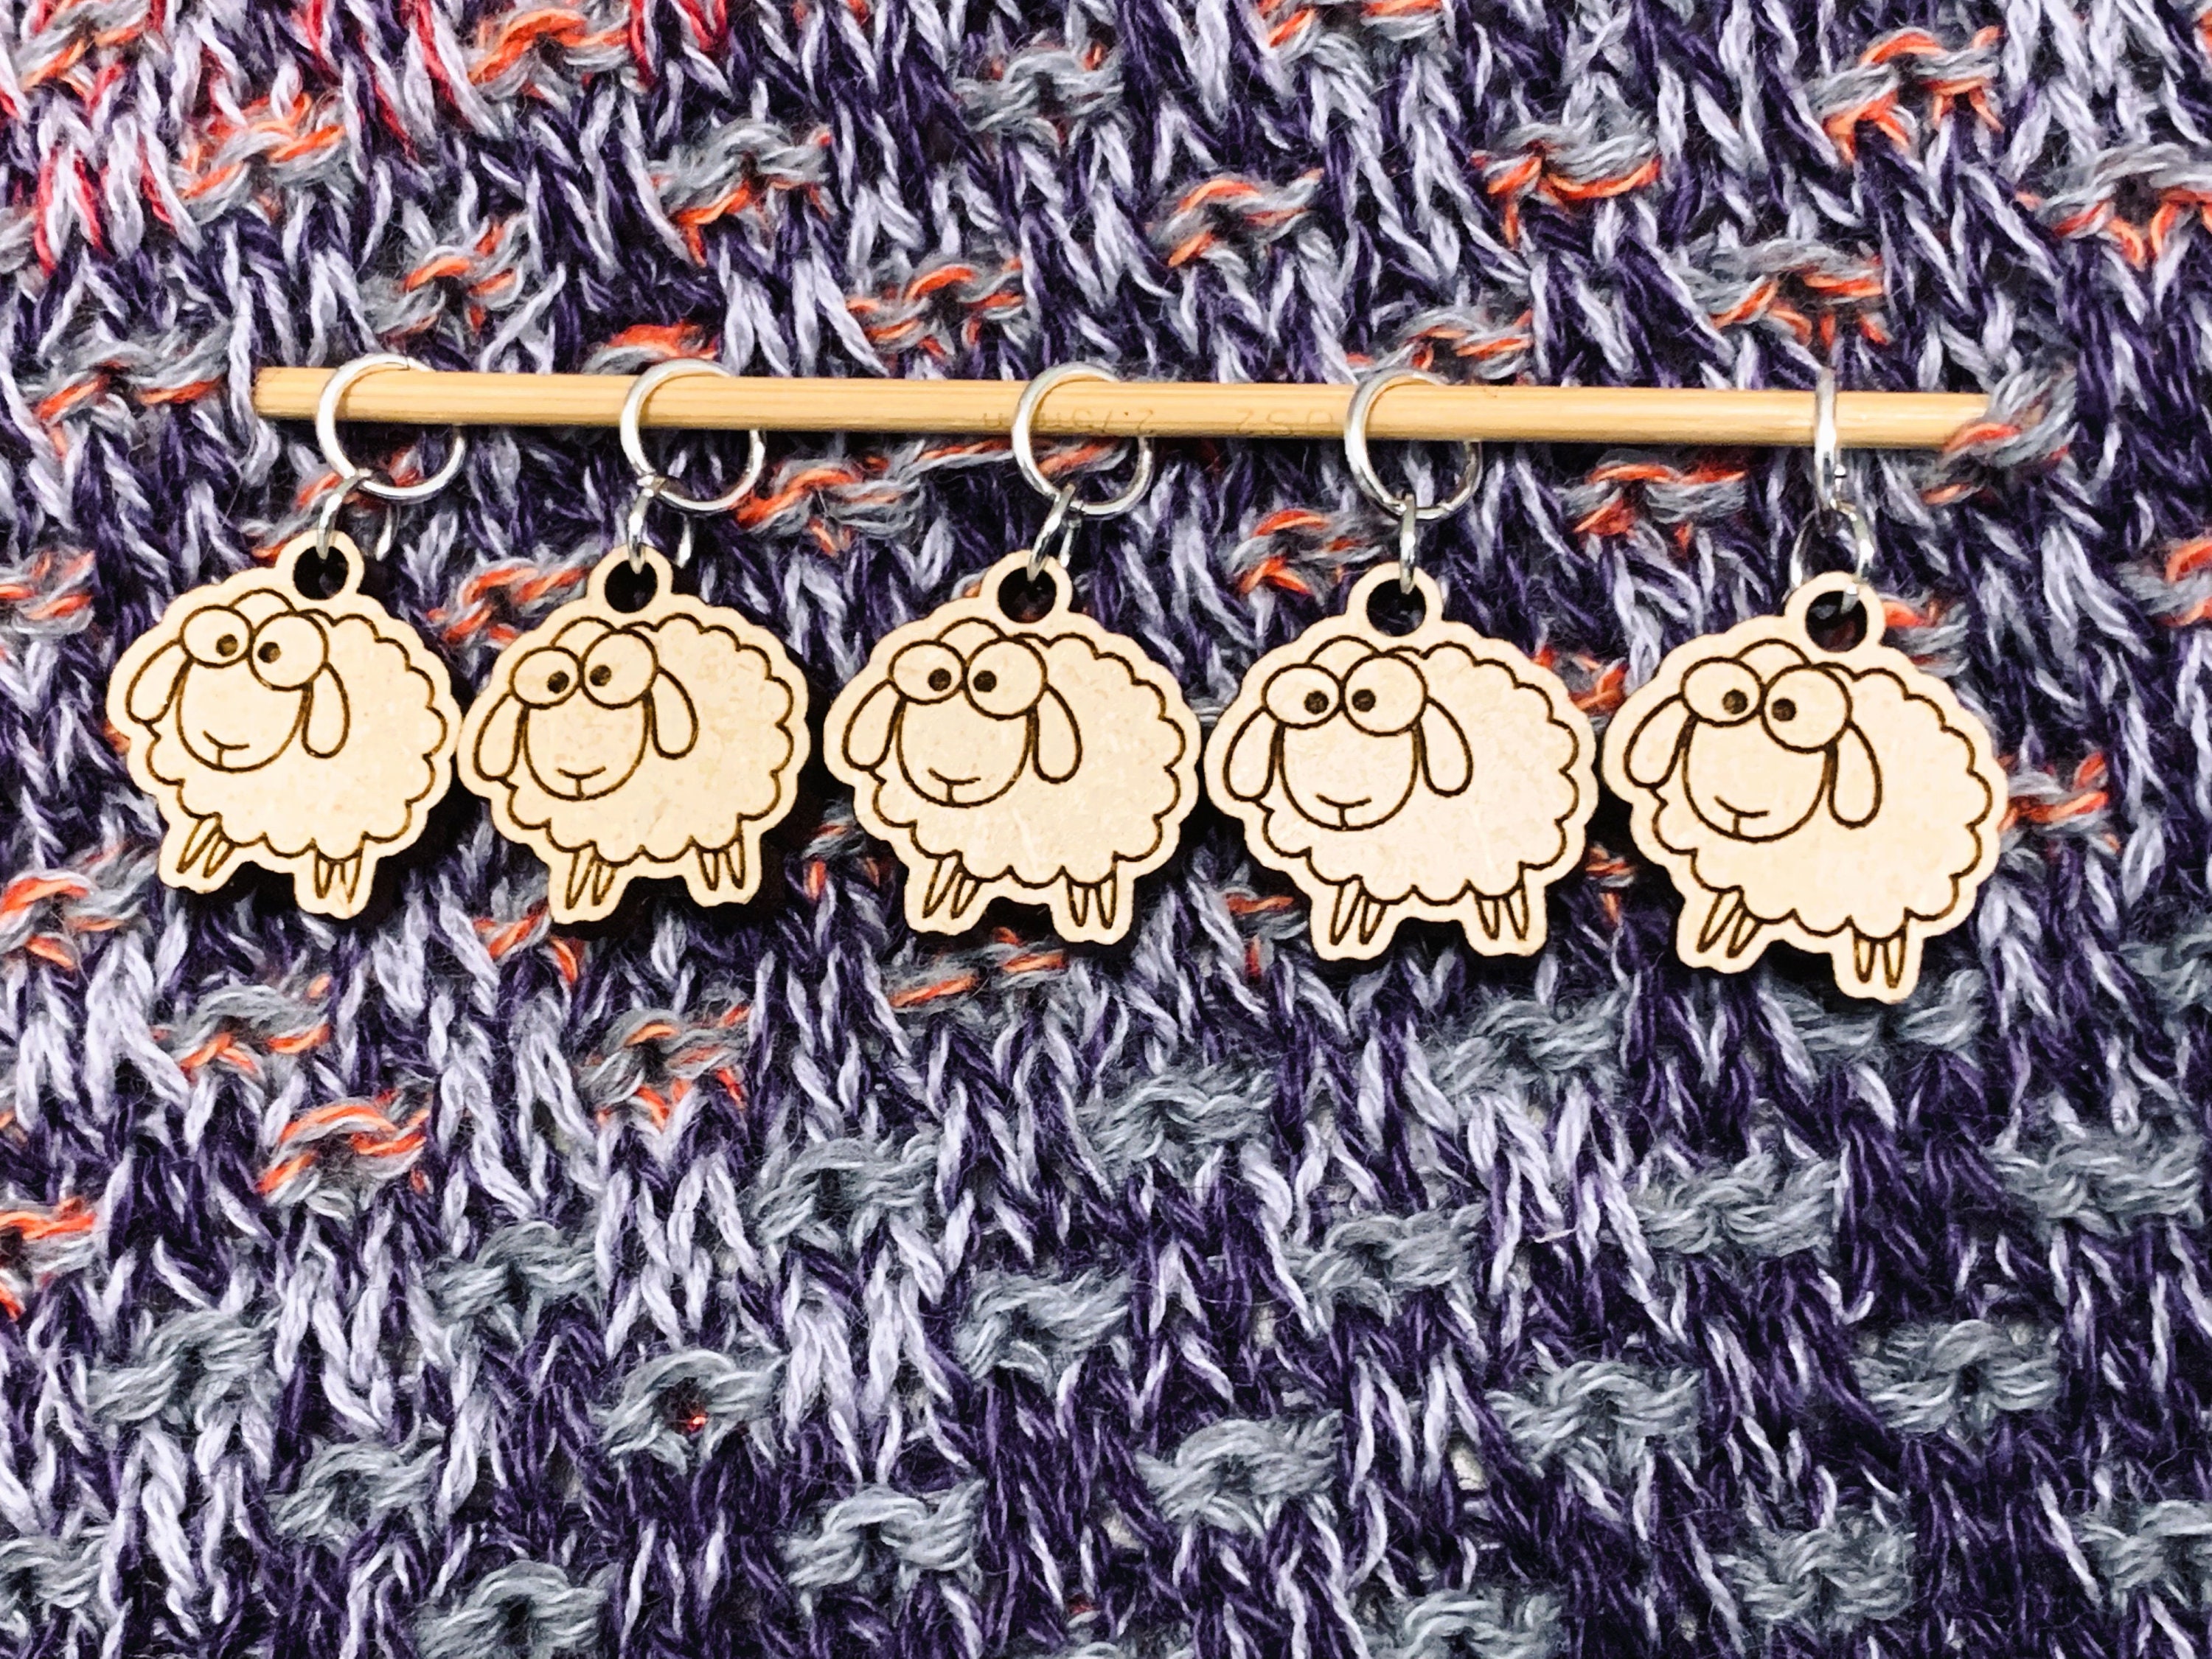 7 Enamel Sheep Stitch Markers Knitters Helper Knitting Reminder